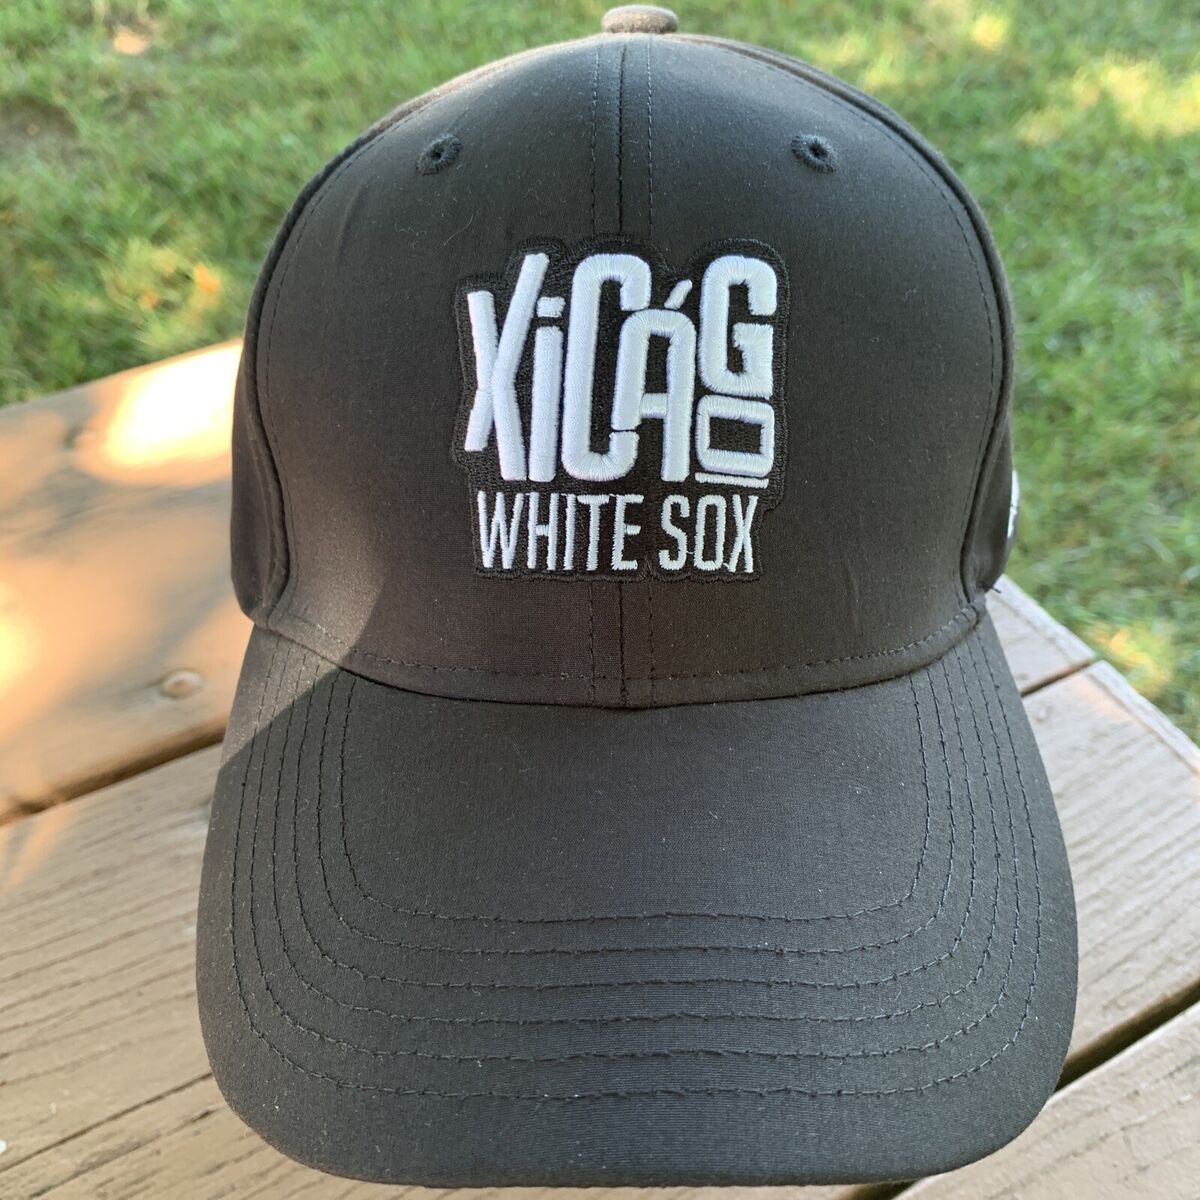 XICAGO White Sox Black Hat Snapback Coca Cola Promotional Cap EUC